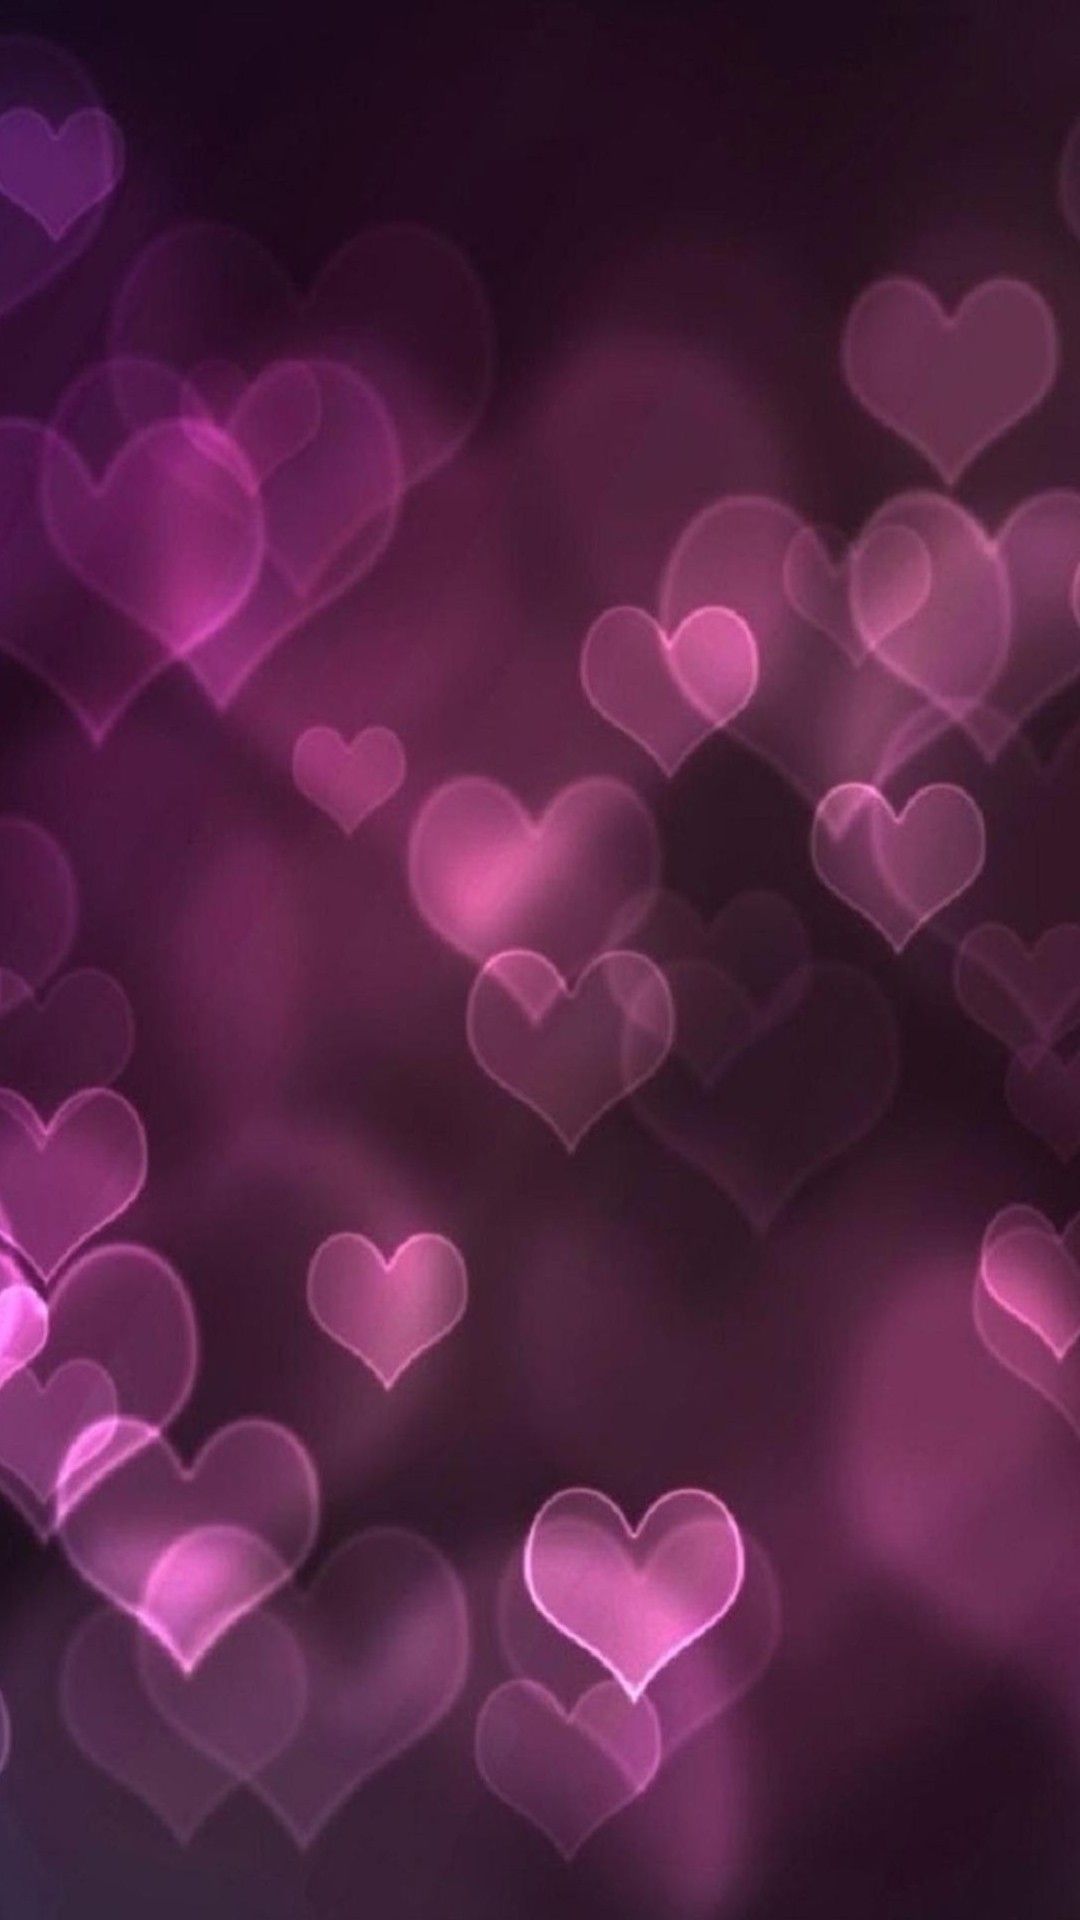 purple-heart-girly-pink-iphone-6-plus-1080x1920-wallpaper.jpg